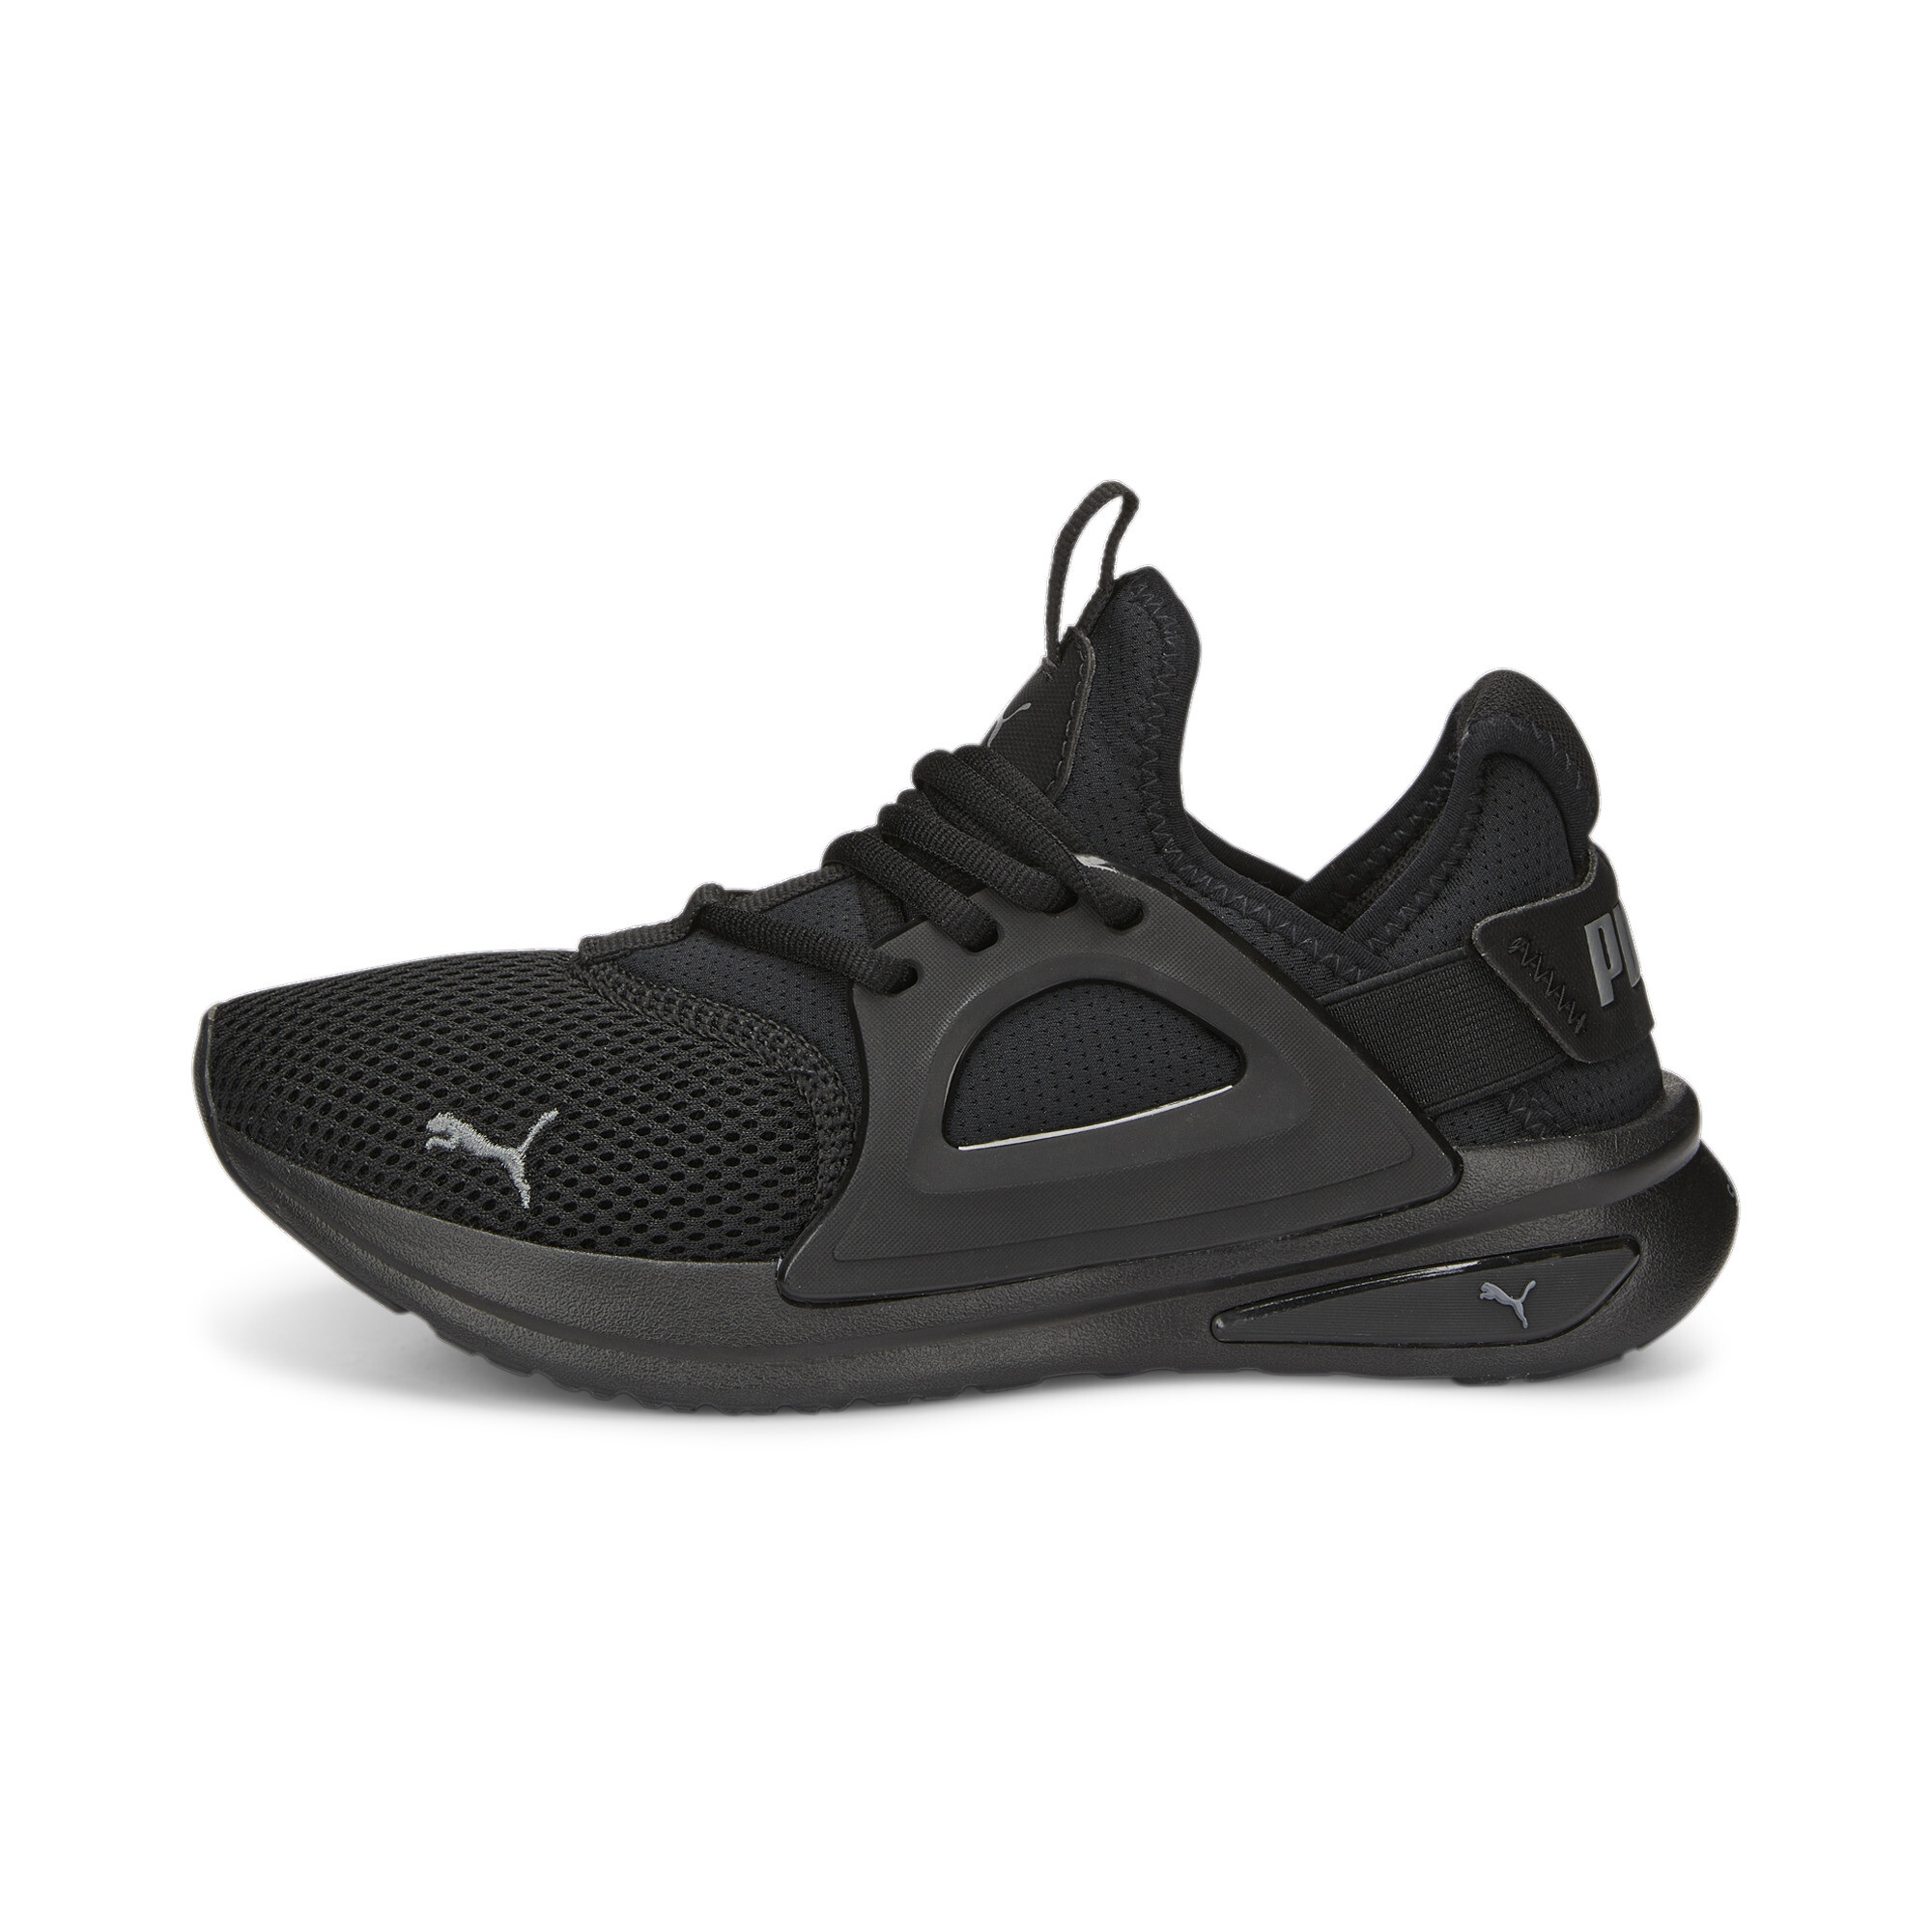 Men's Puma Softride Enzo Evo Running Shoes, Black, Size 39, Shoes